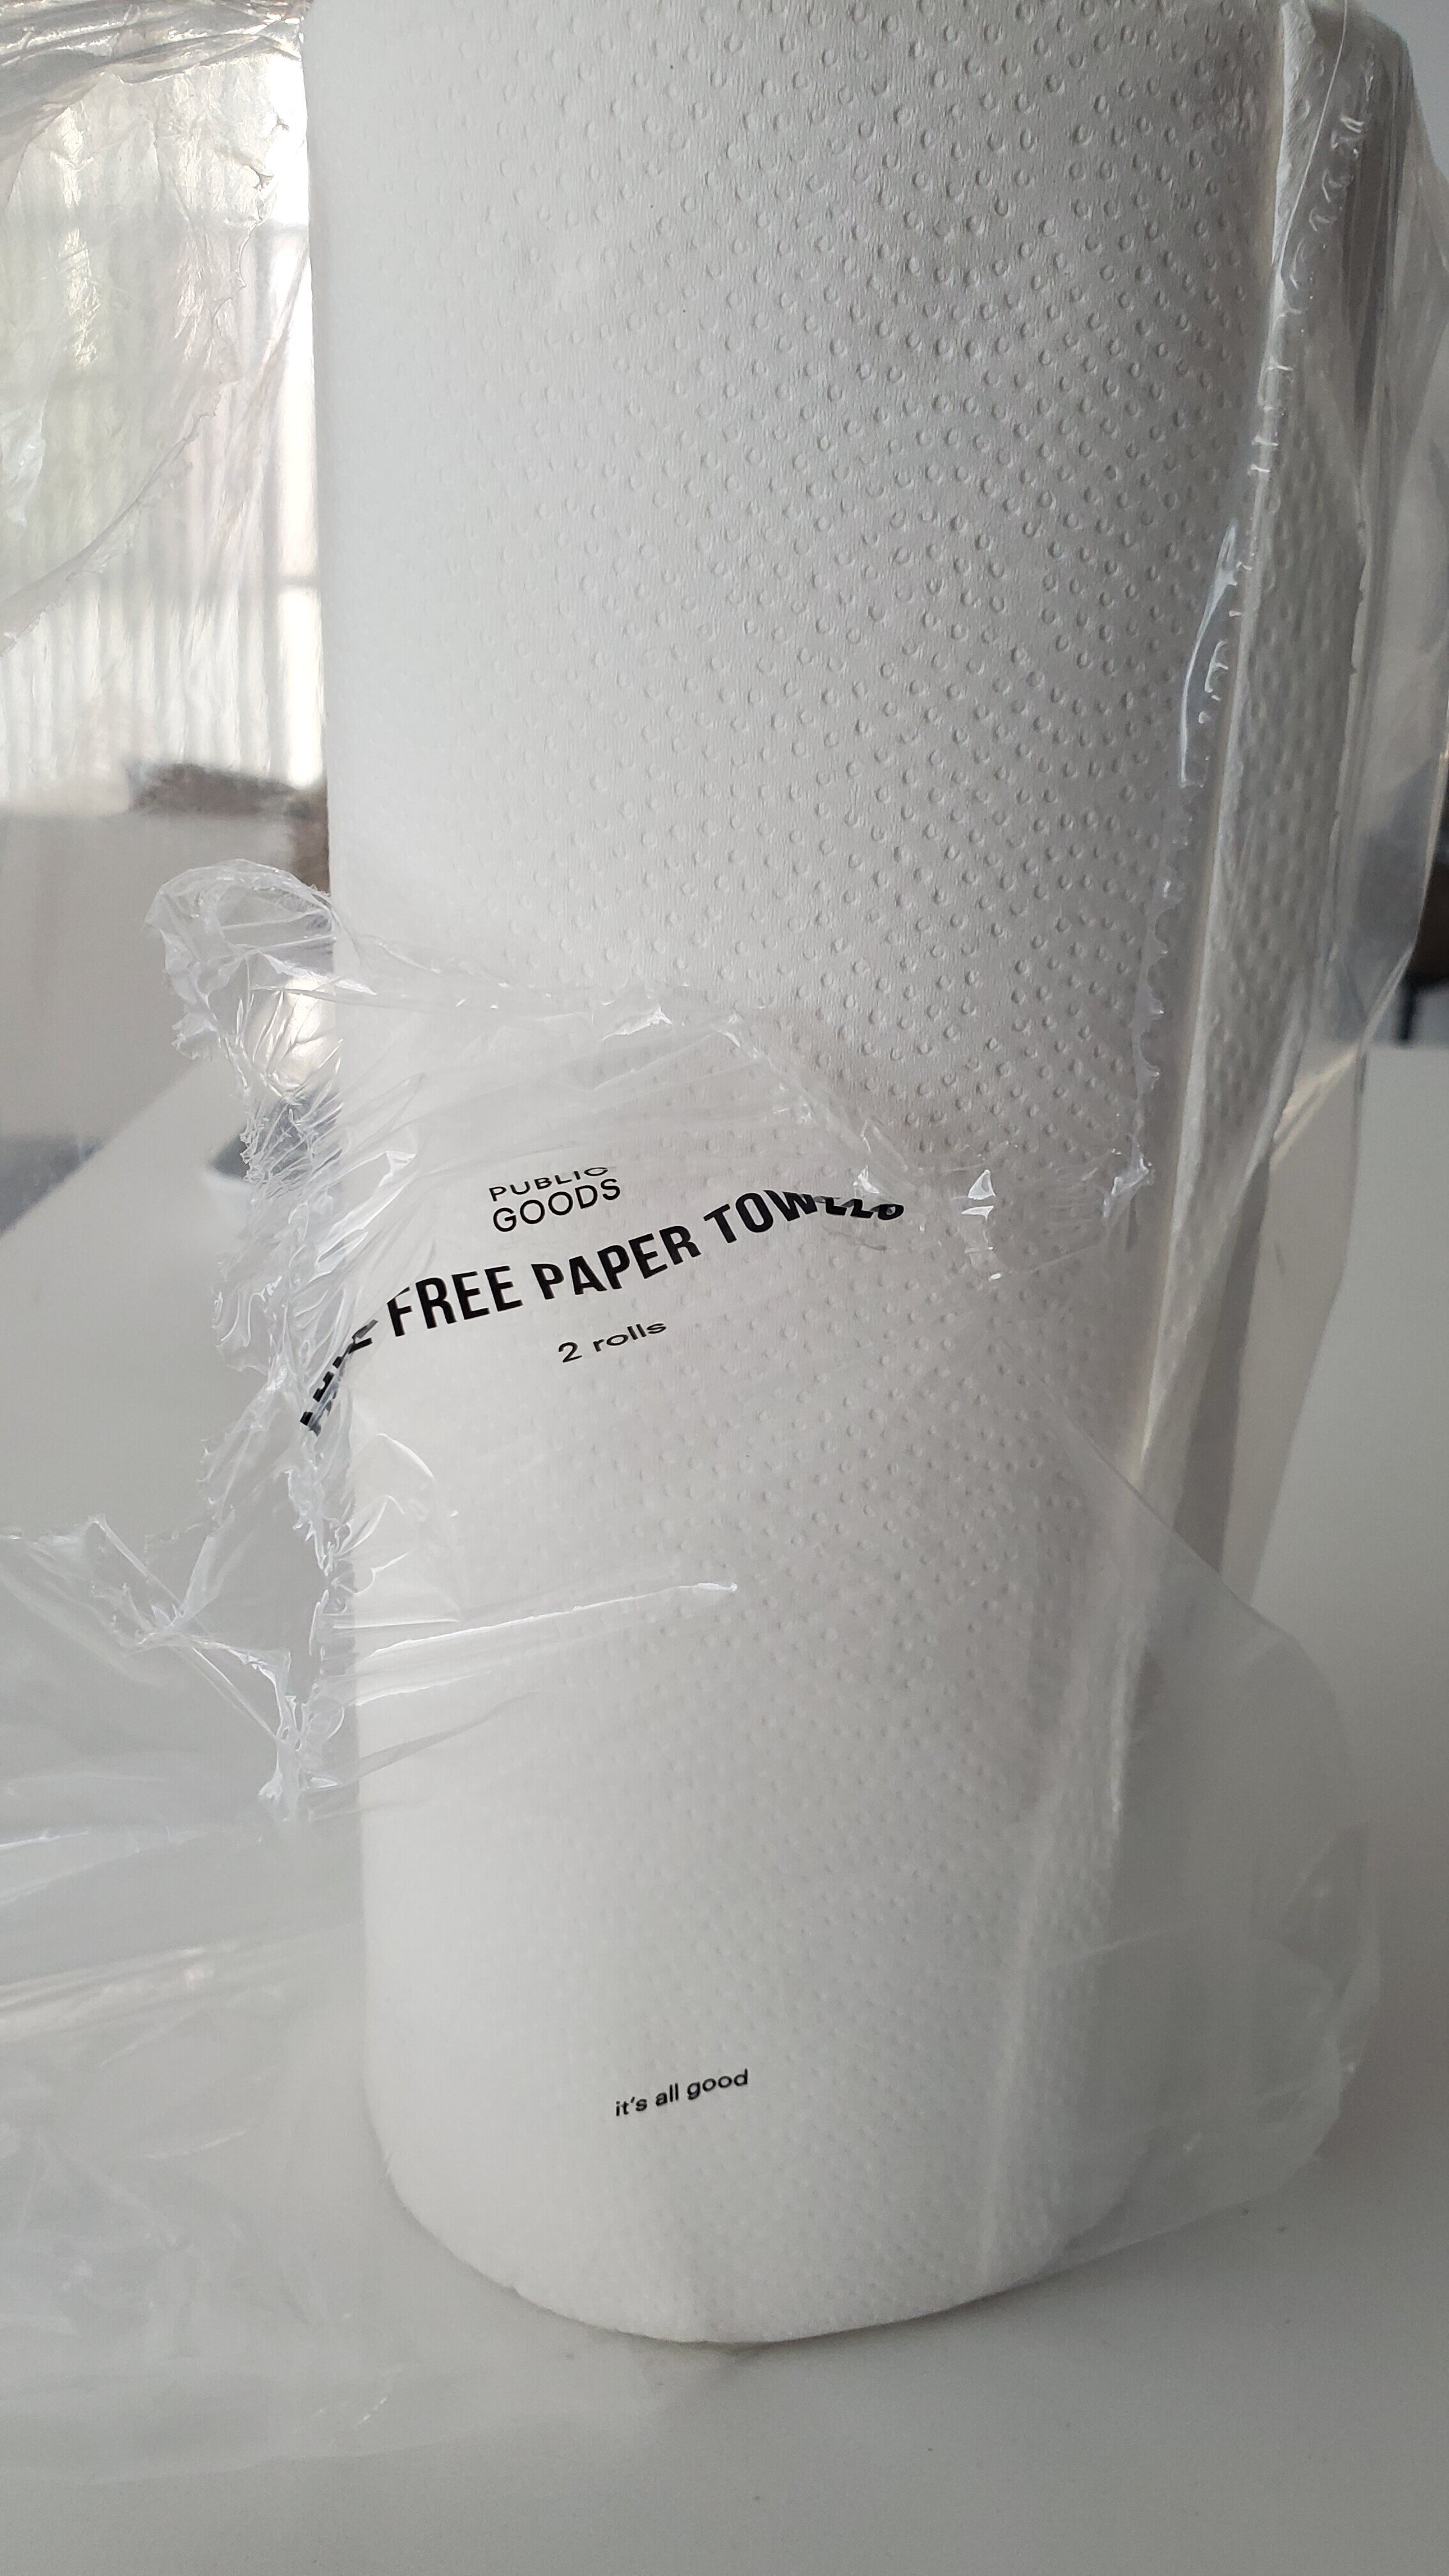 Pubilc goods tree free paper towel.jpg